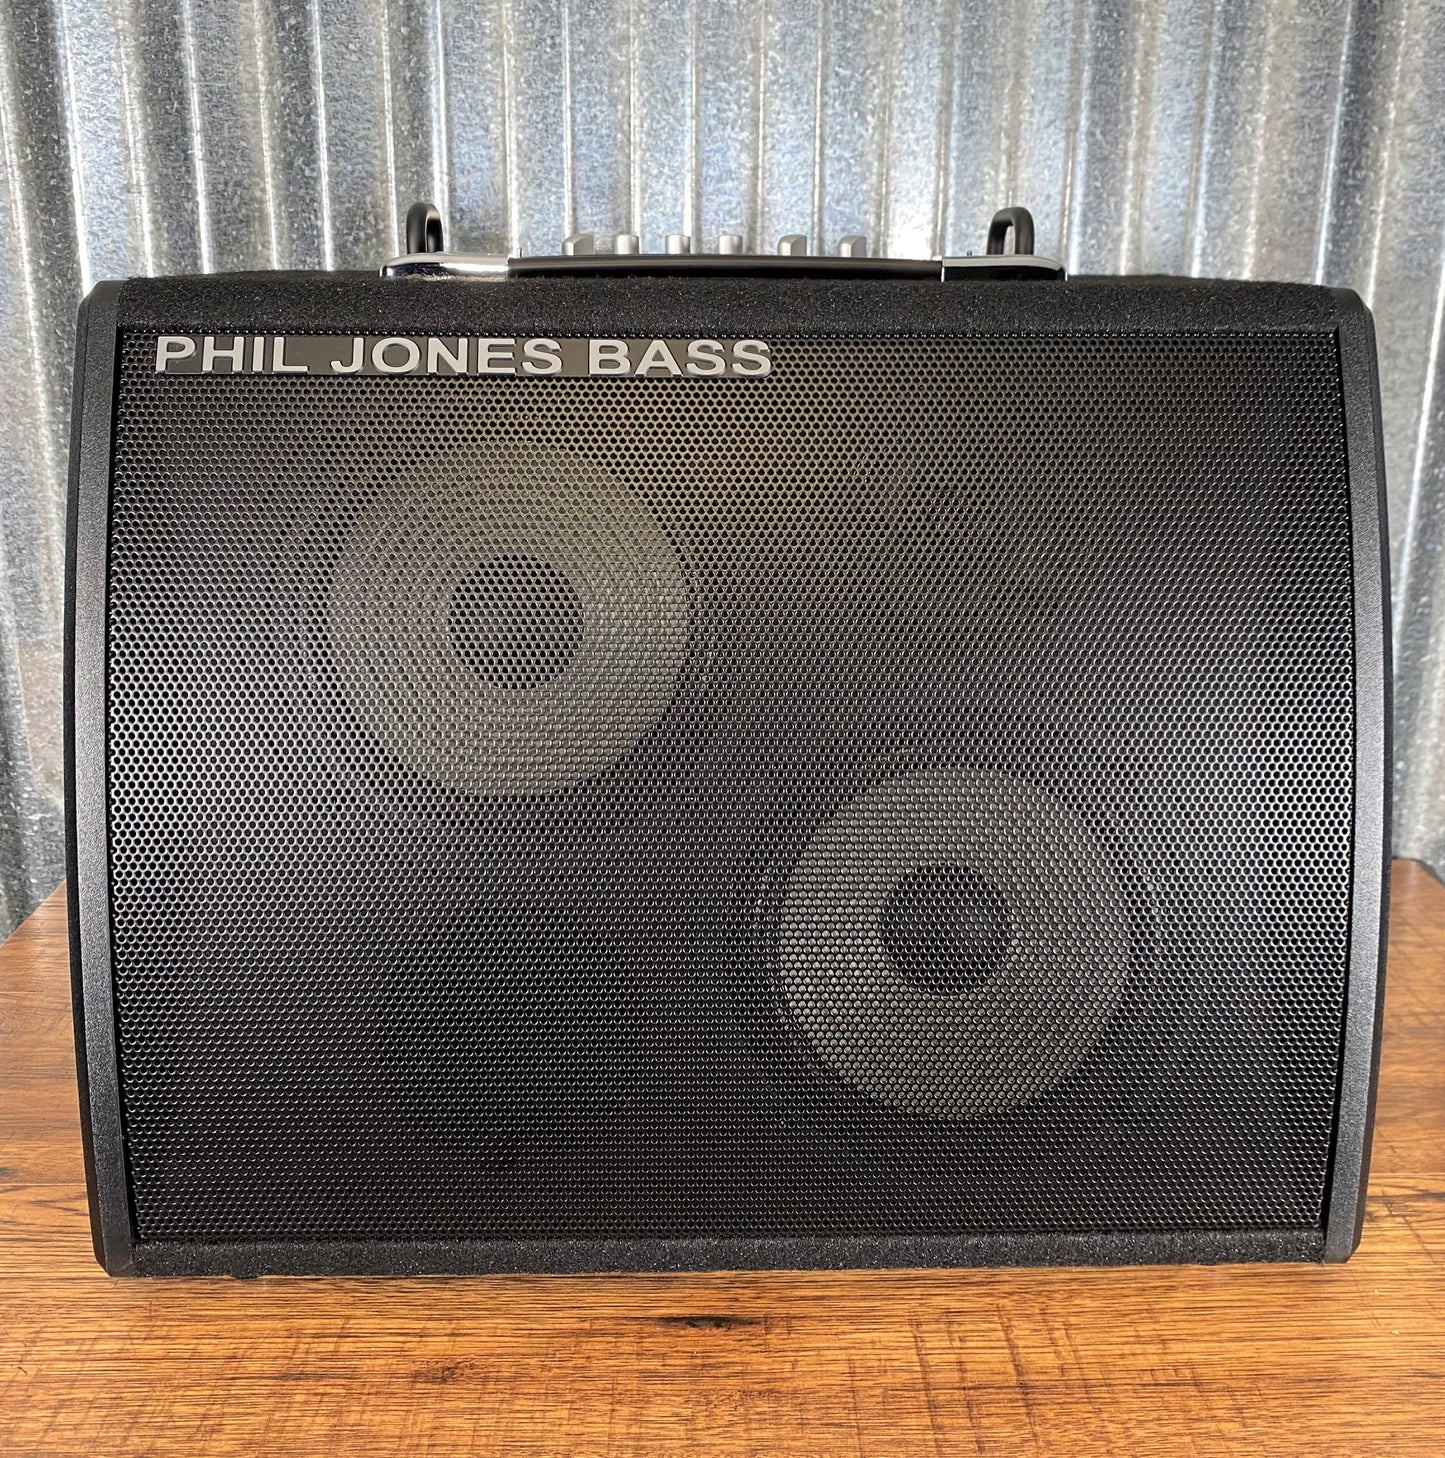 Phil Jones Bass S-77 Session 77 100 Watt 2x7" + 3" Tweeter Bass Amplifier Combo Black